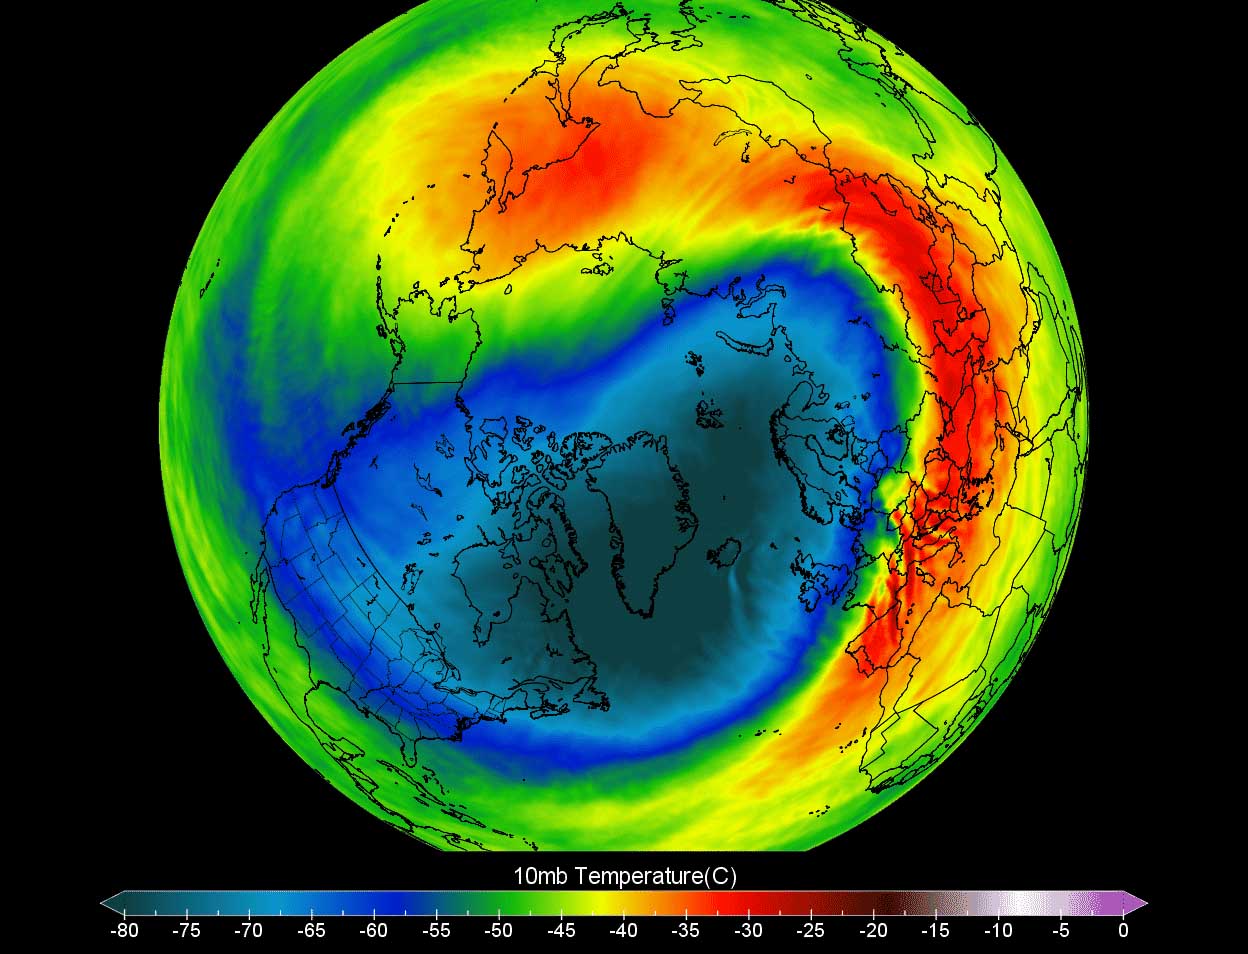 winter-storm-finn-ember-snow-blizzard-forecast-polar-vortex-united-states-canada-stratosphere